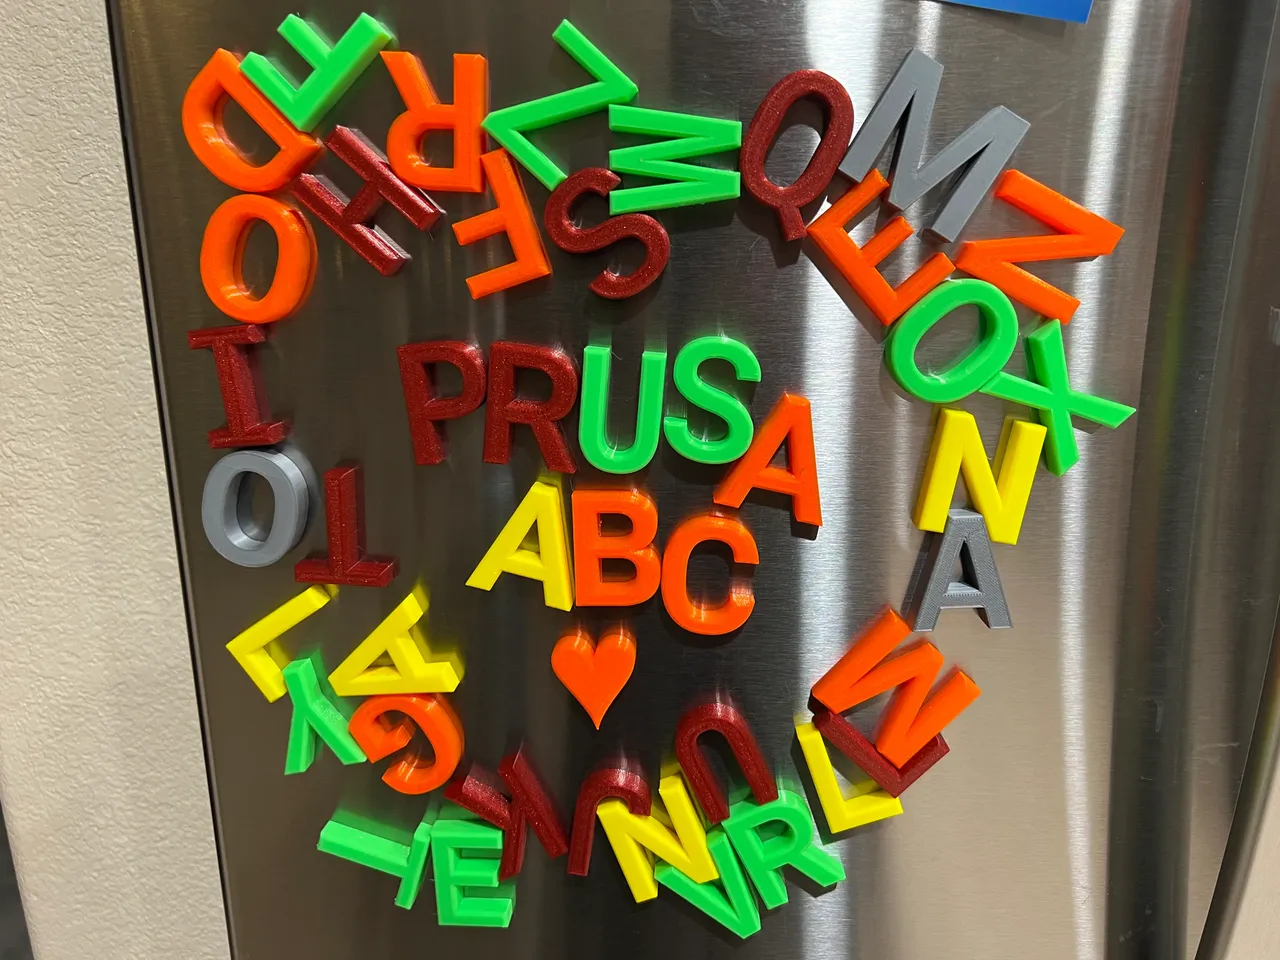 fridge magnet letters font